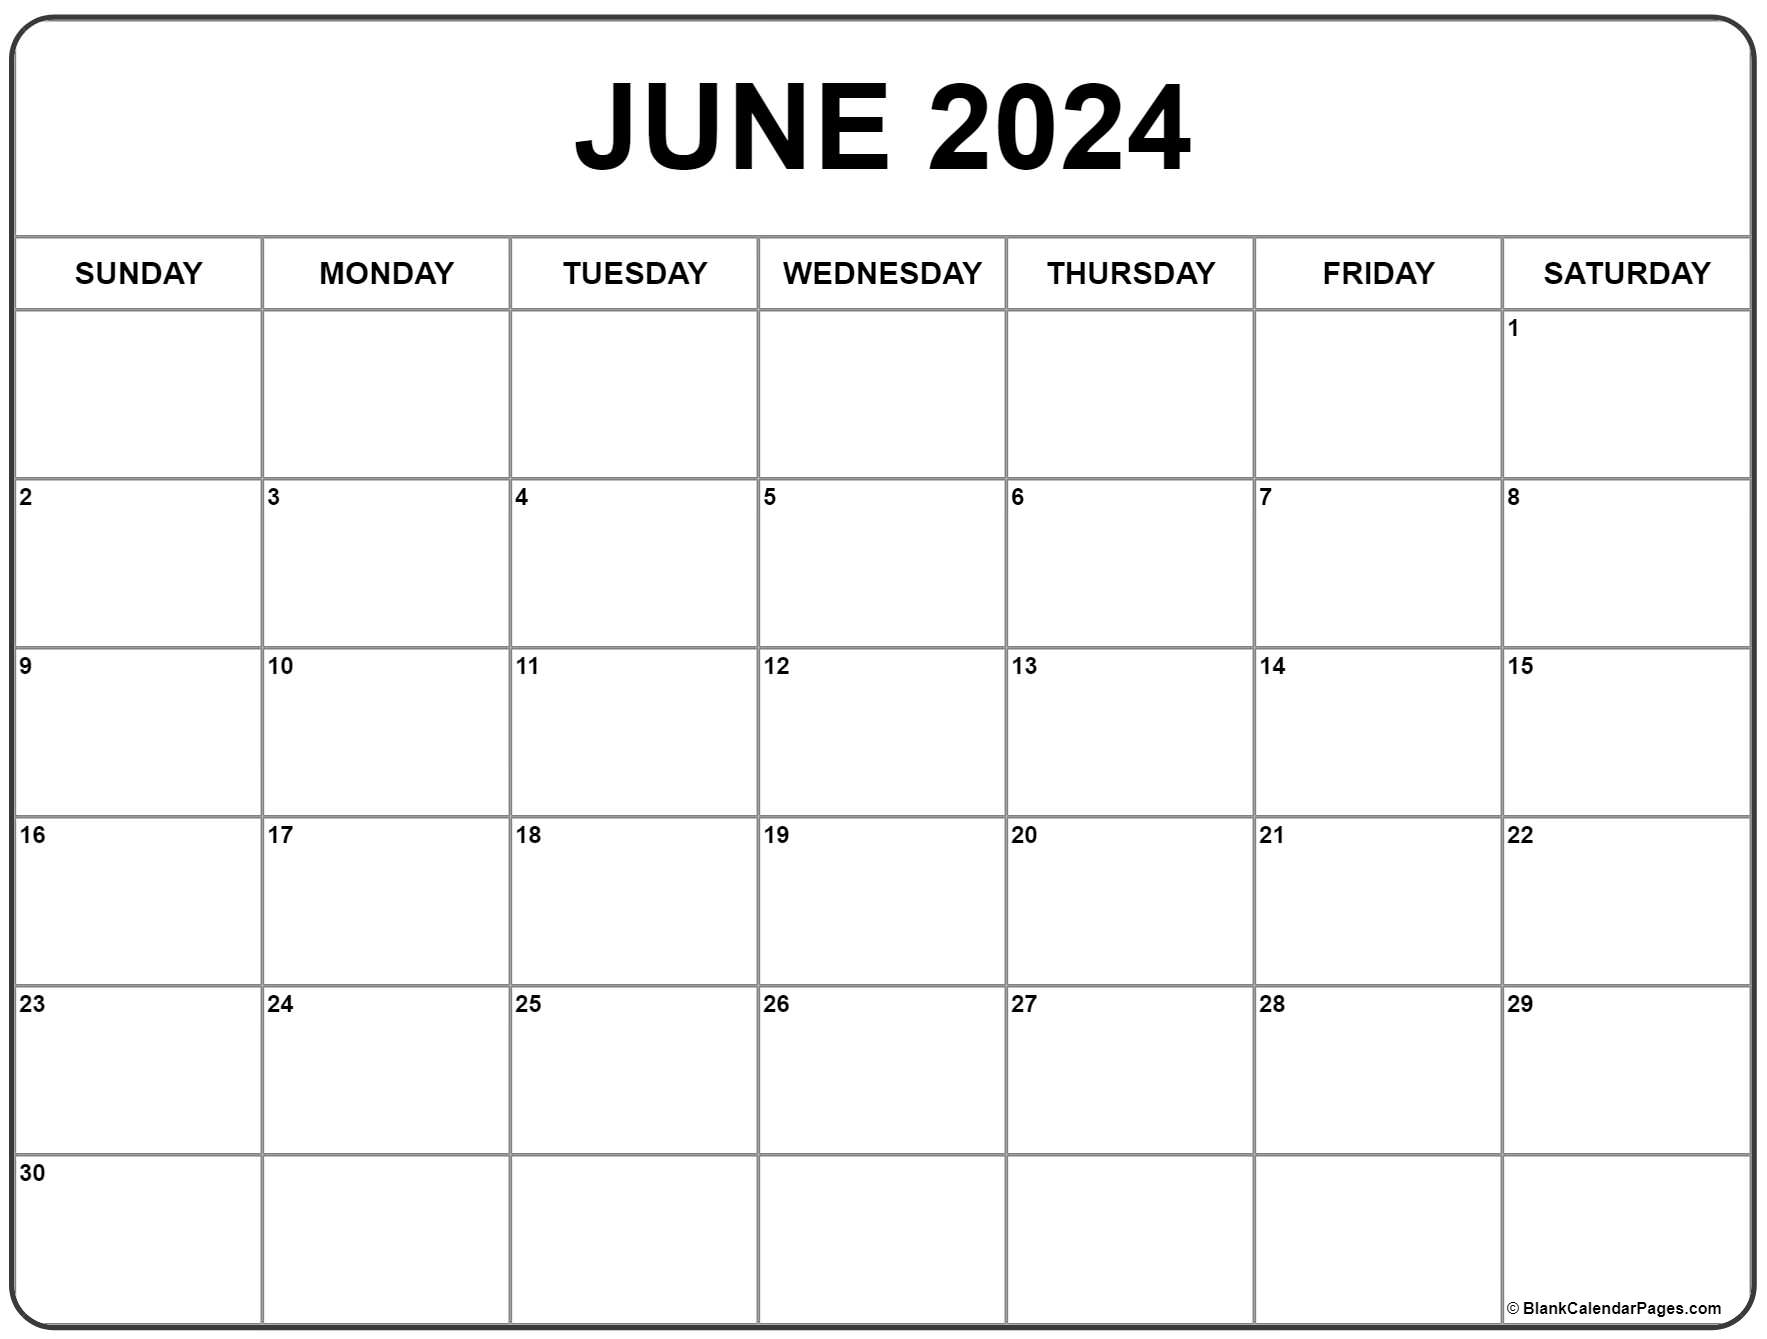 June 2024 calendar free printable calendar